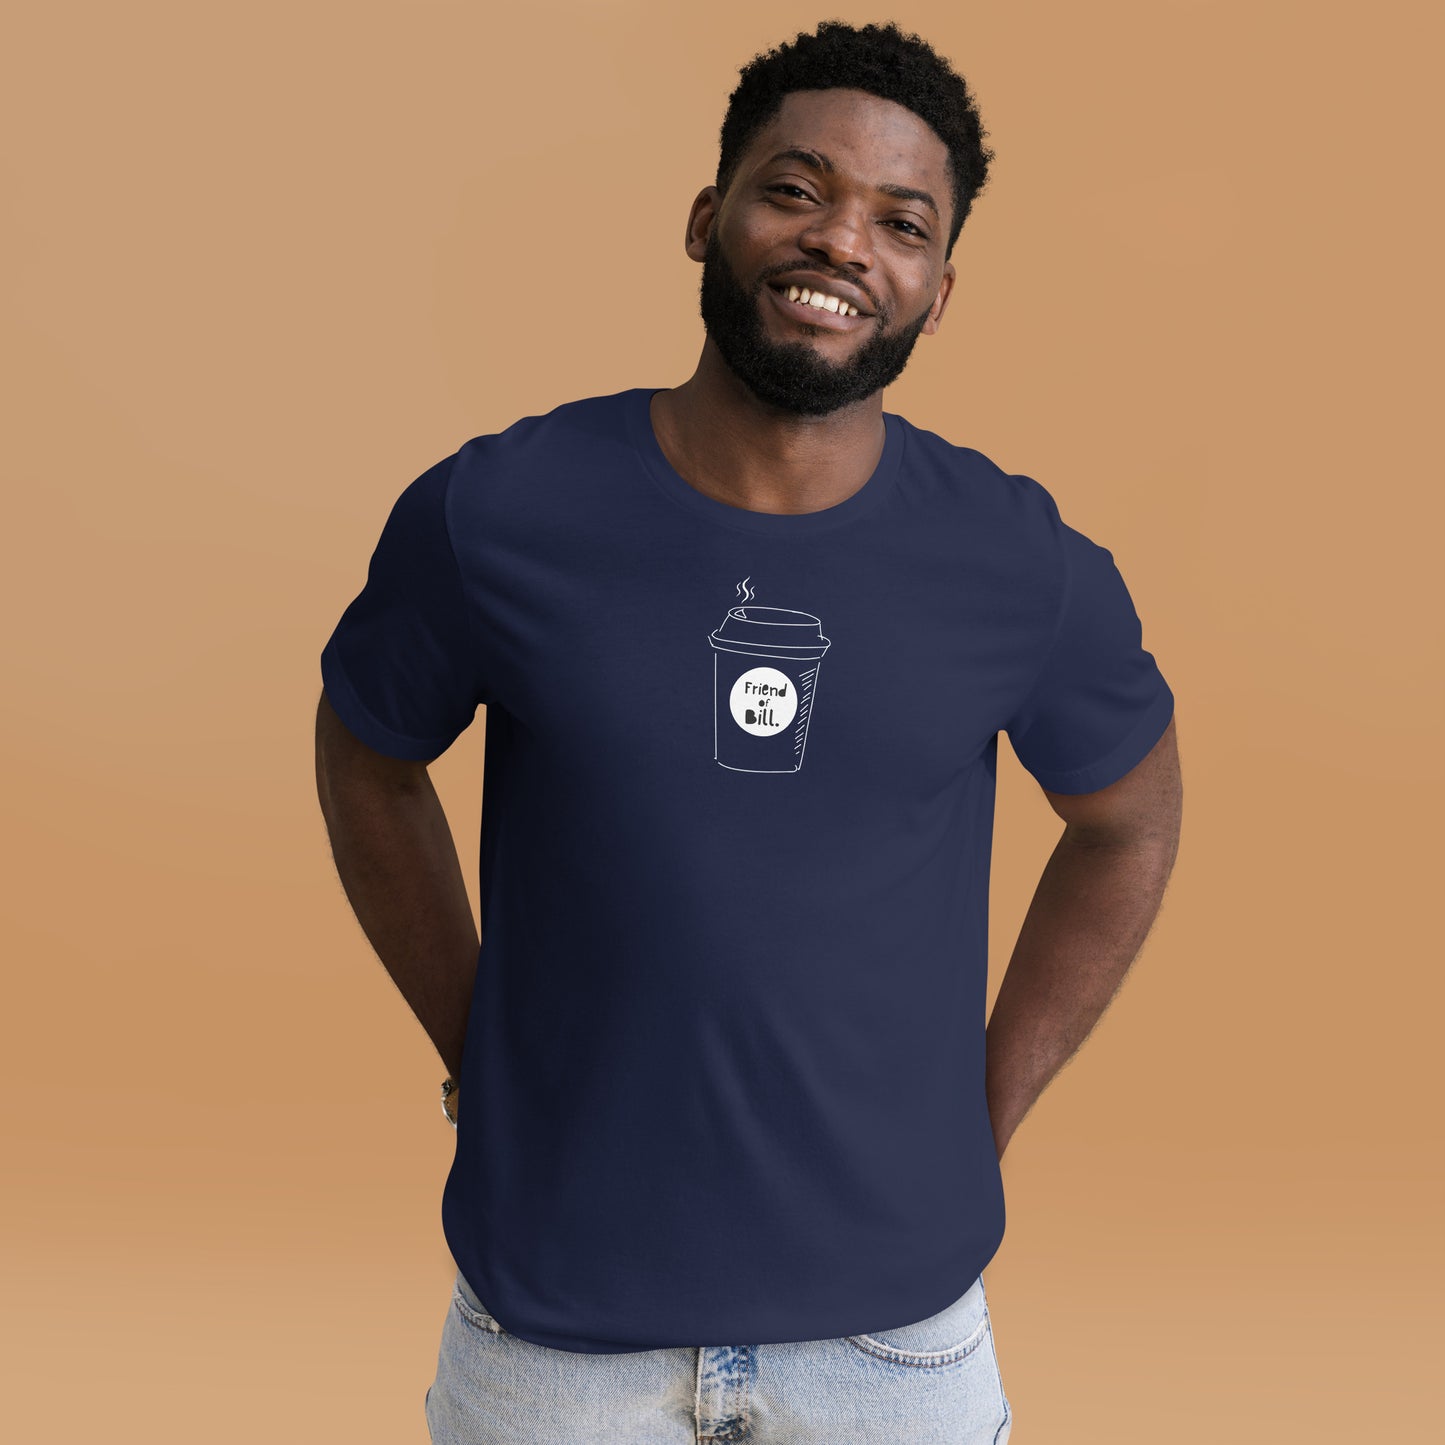 Friend of Bill - Unisex t-shirt